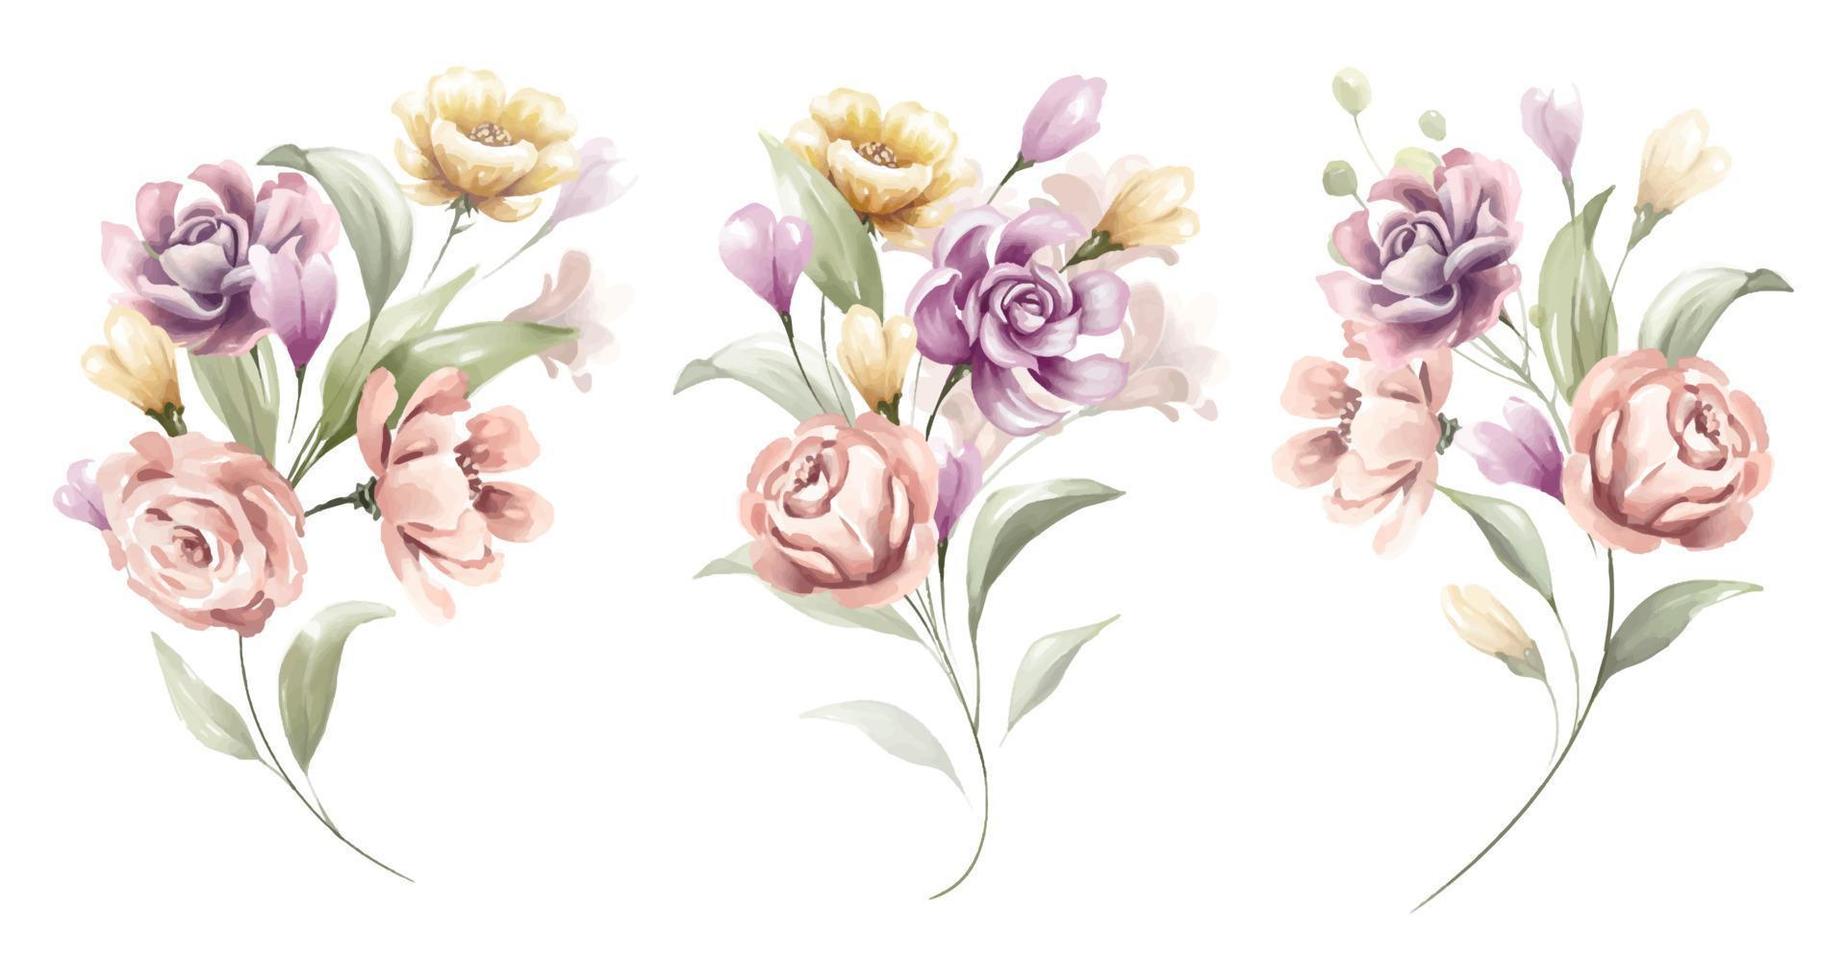 Colorful watercolor floral bouquet collection vector